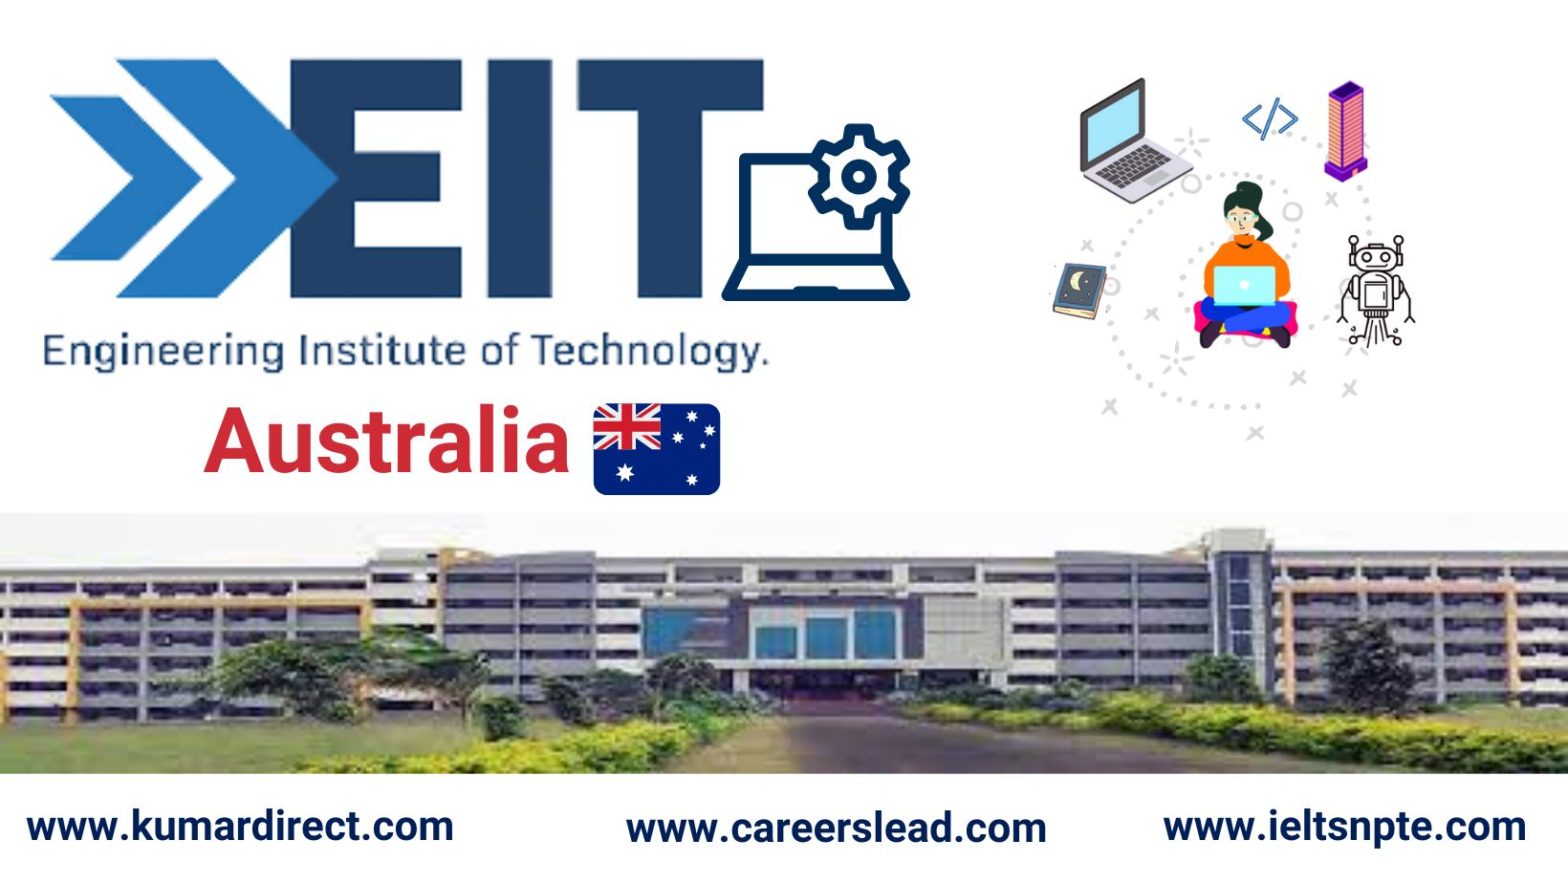 Engineering Institute of Technology (EIT) - Australia